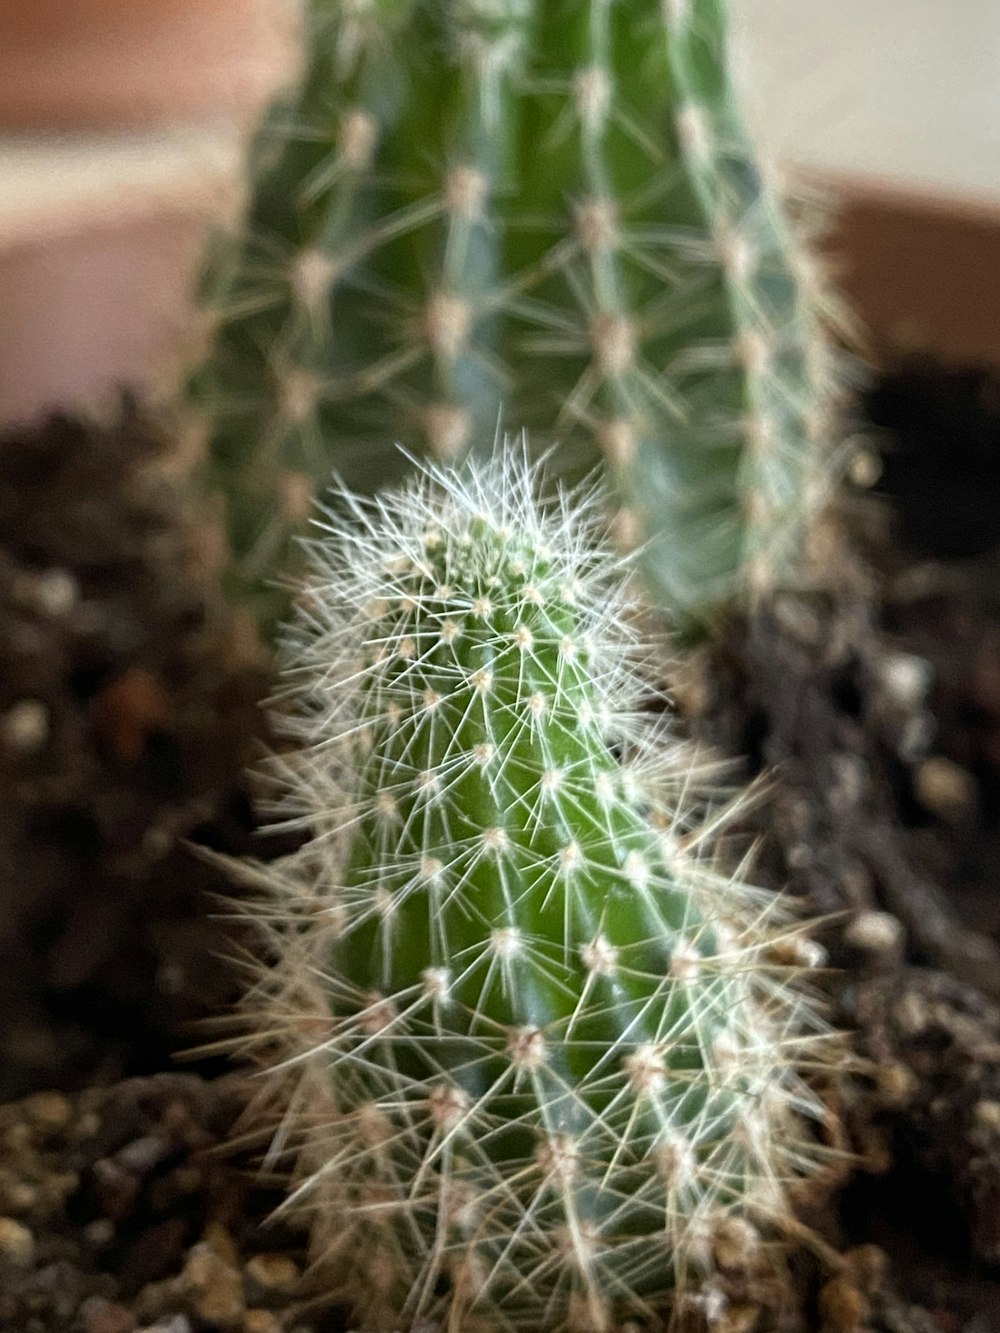 green cactus plant in brown soil